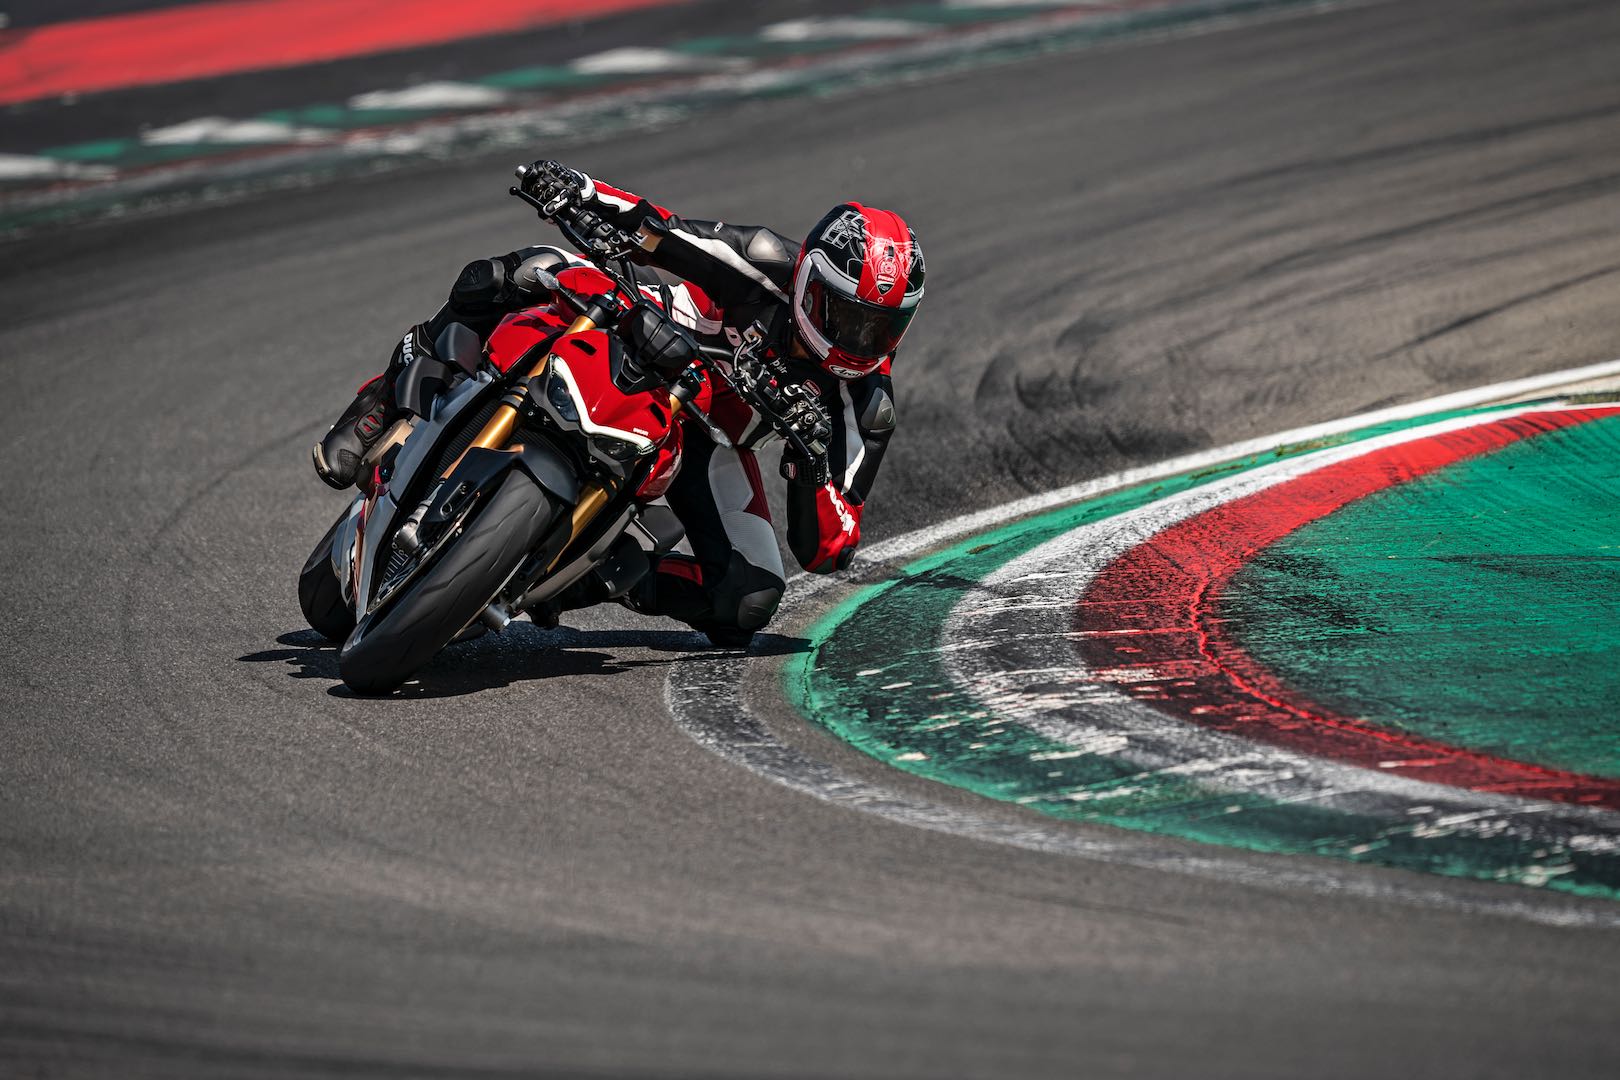 Ducati Streetfighter V4 Wallpaper 4K